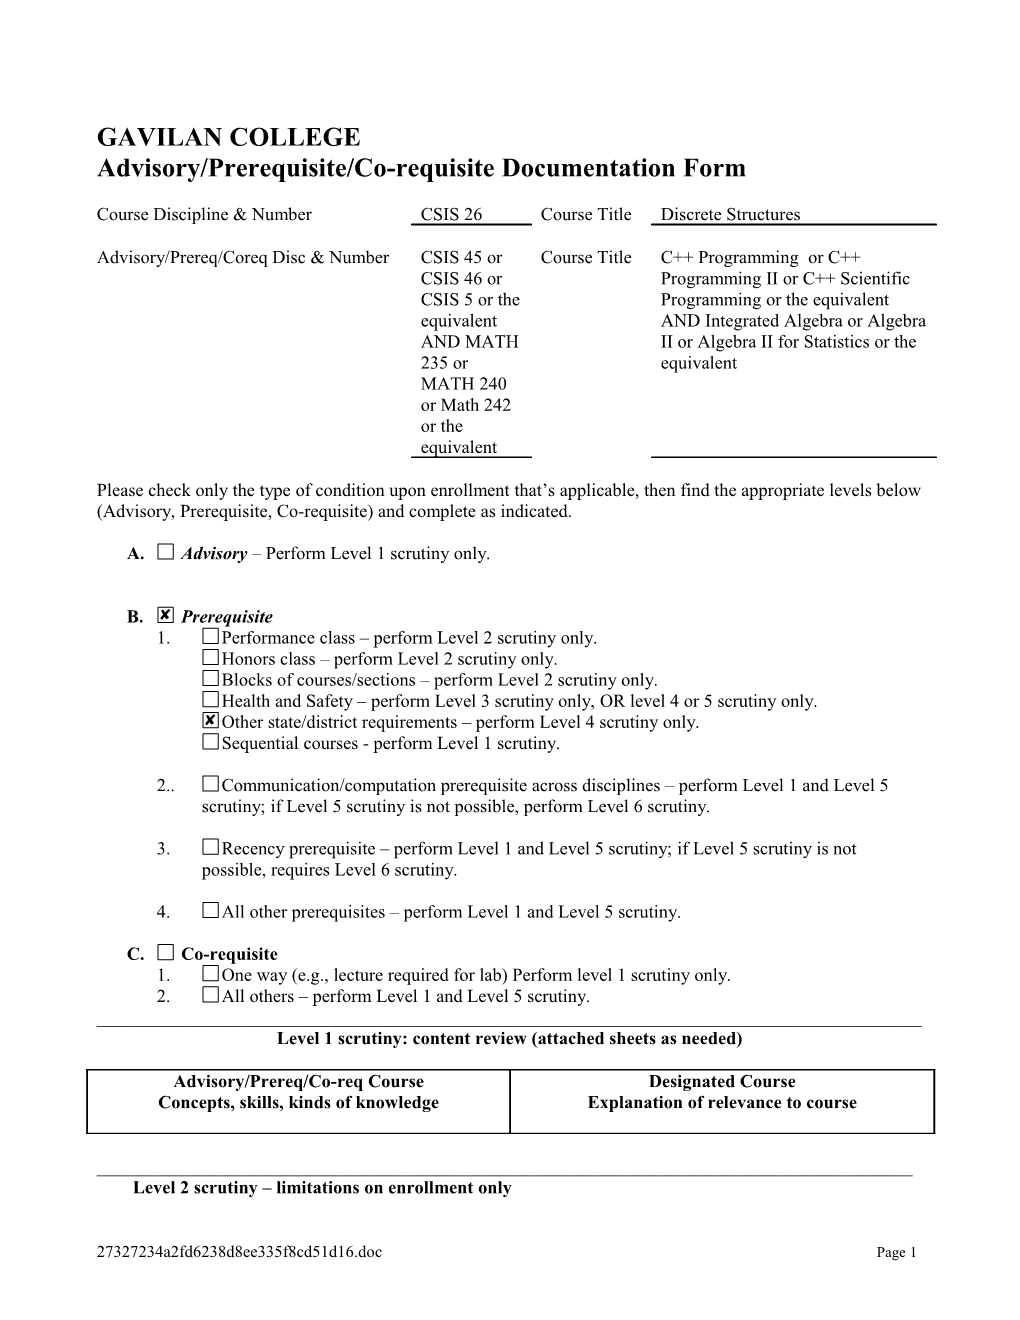 Advisory/Prerequisite/Co-Requisite Documentation Form